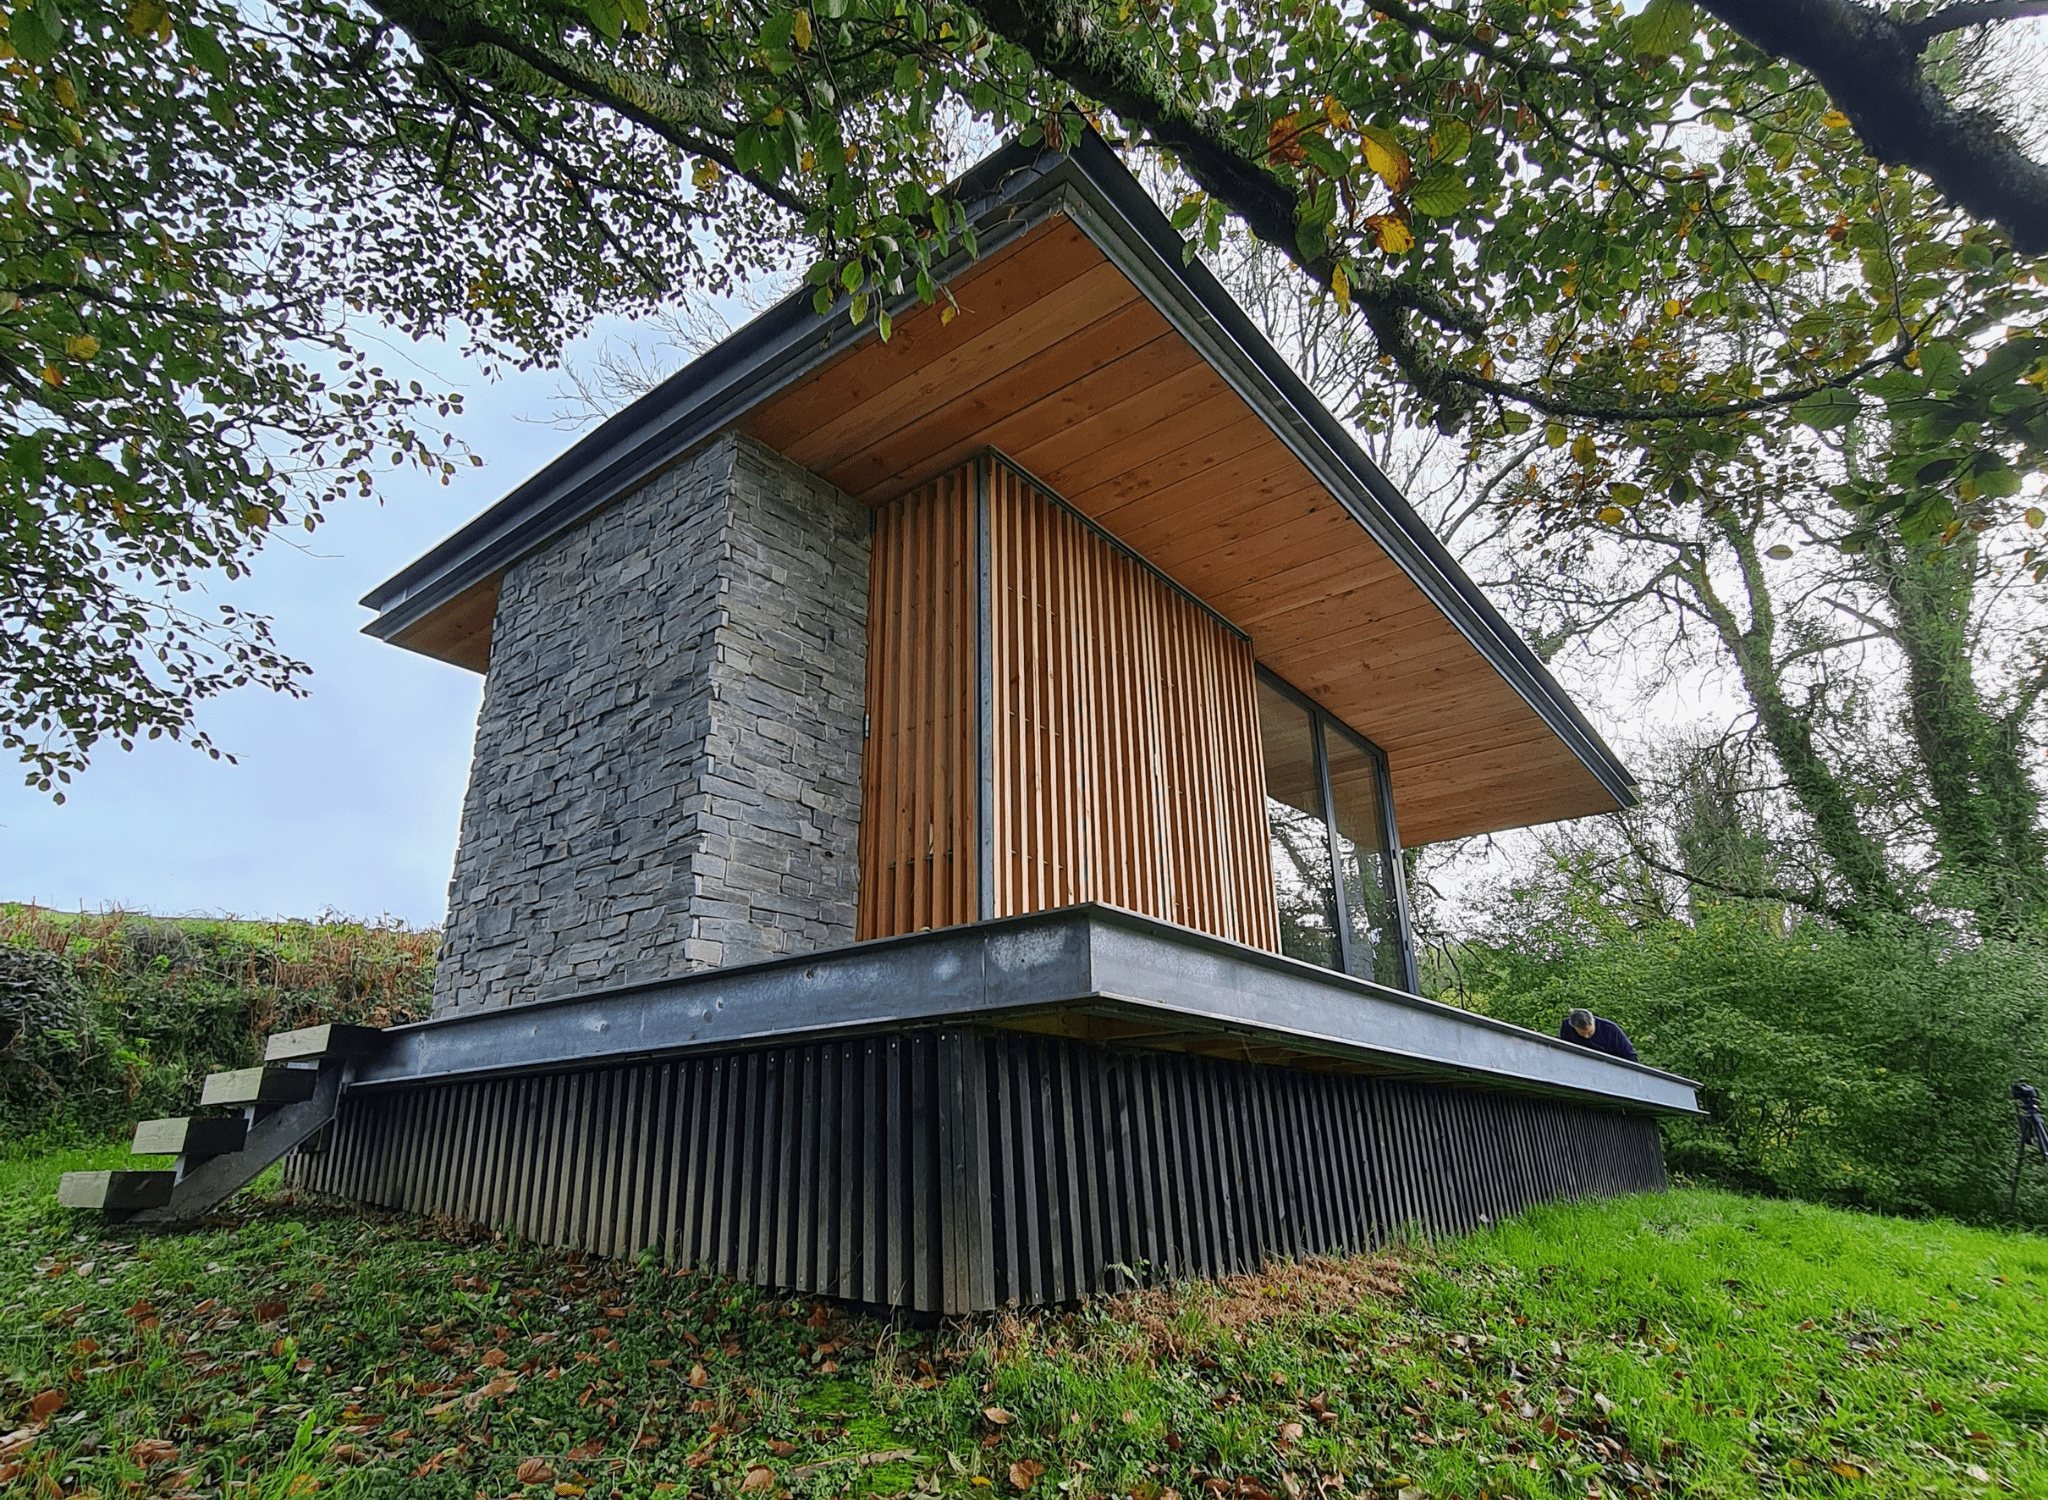 Moden Pavilion garden summerhouse architect designed. Life Space Cabins